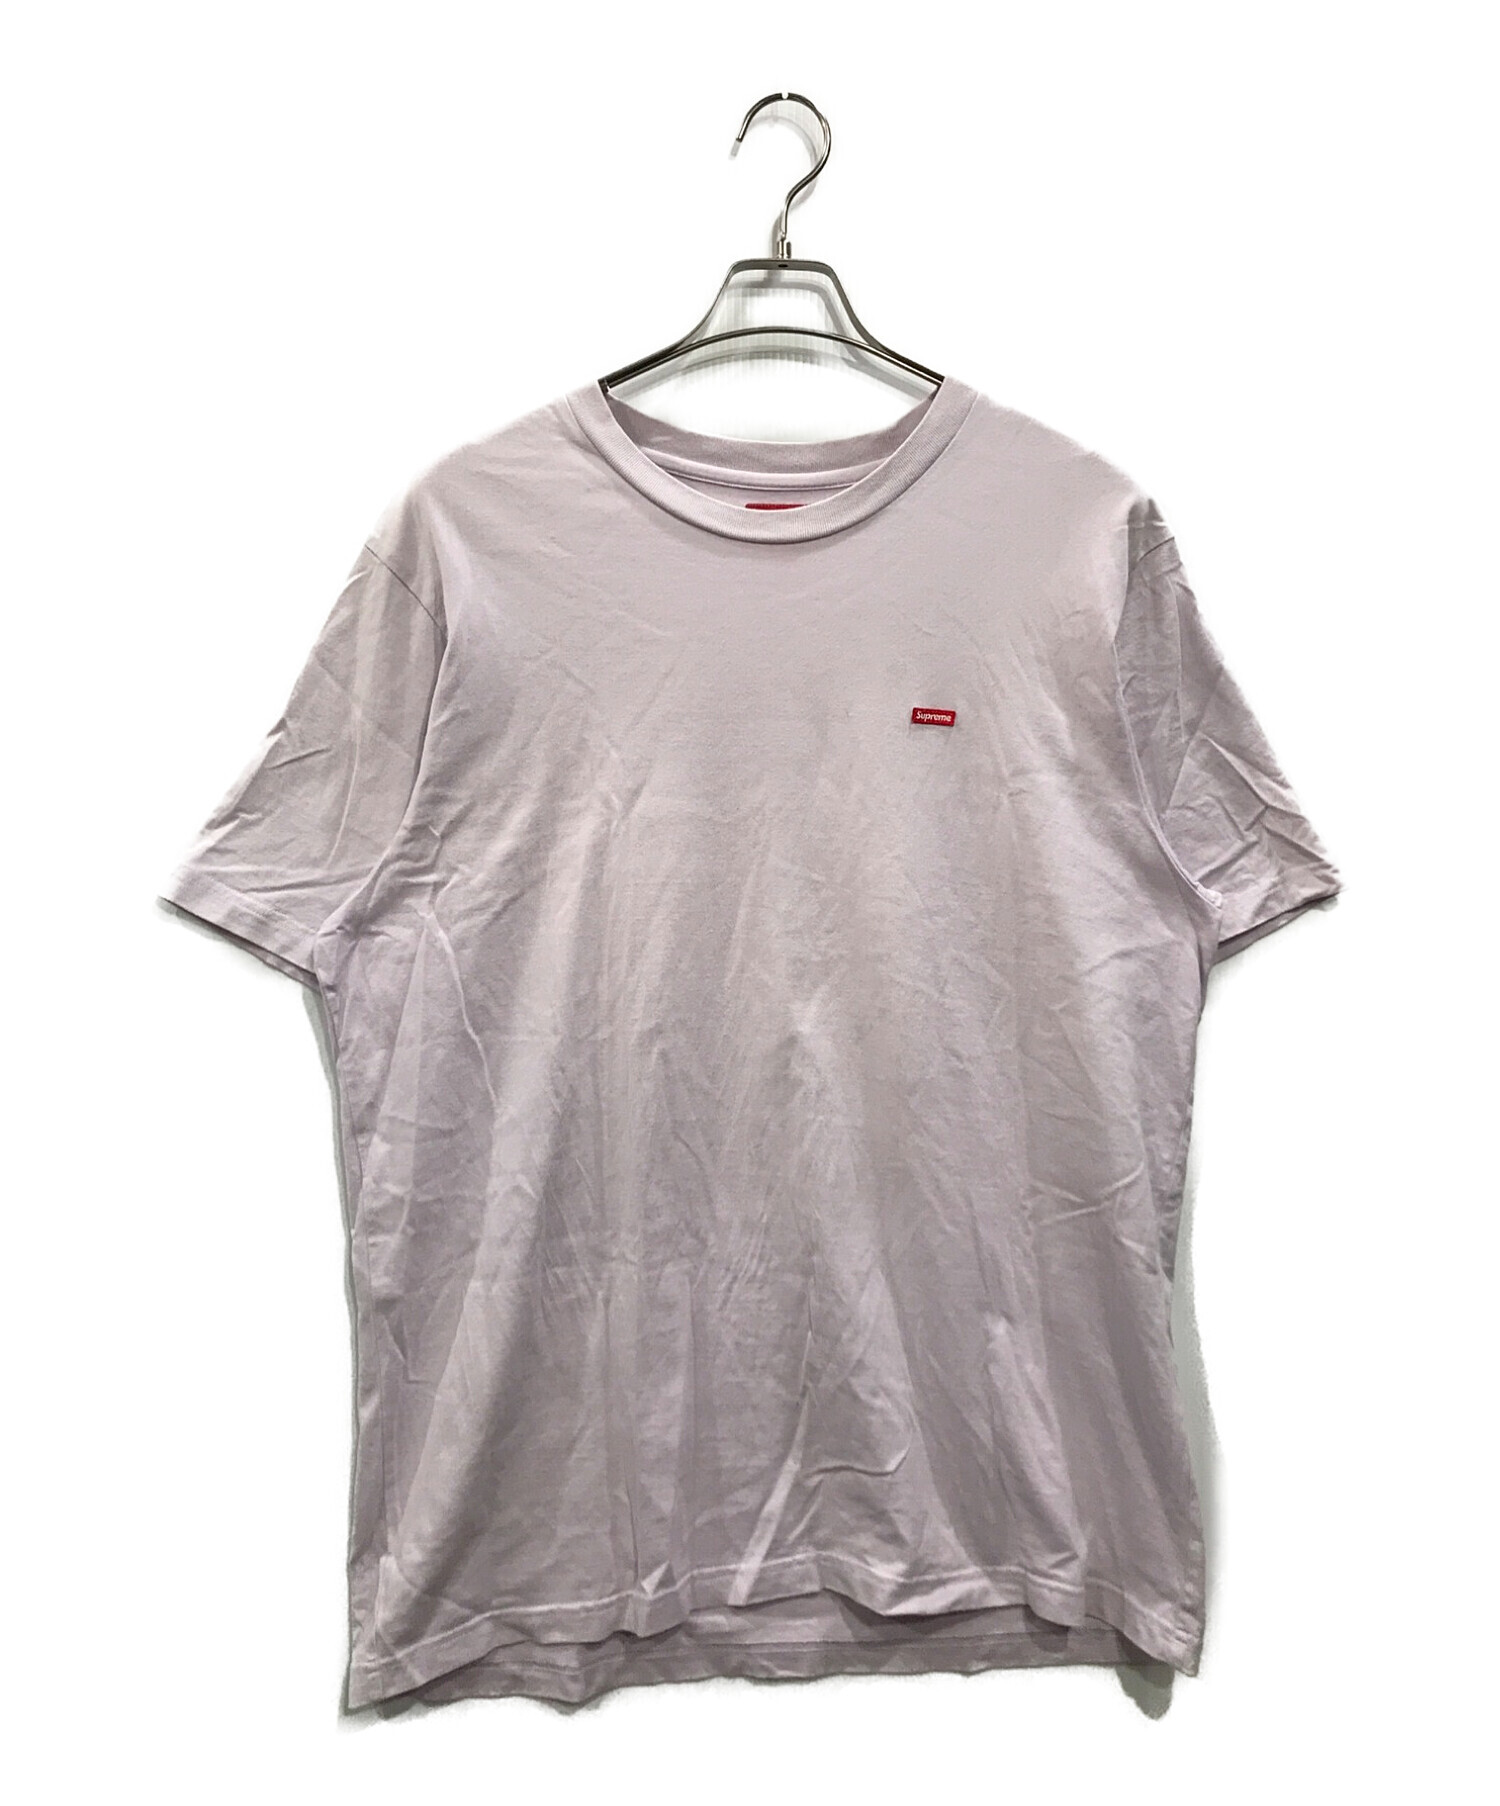 Supreme (シュプリーム) スモールボックスロゴ tシャツ パープル サイズ:L